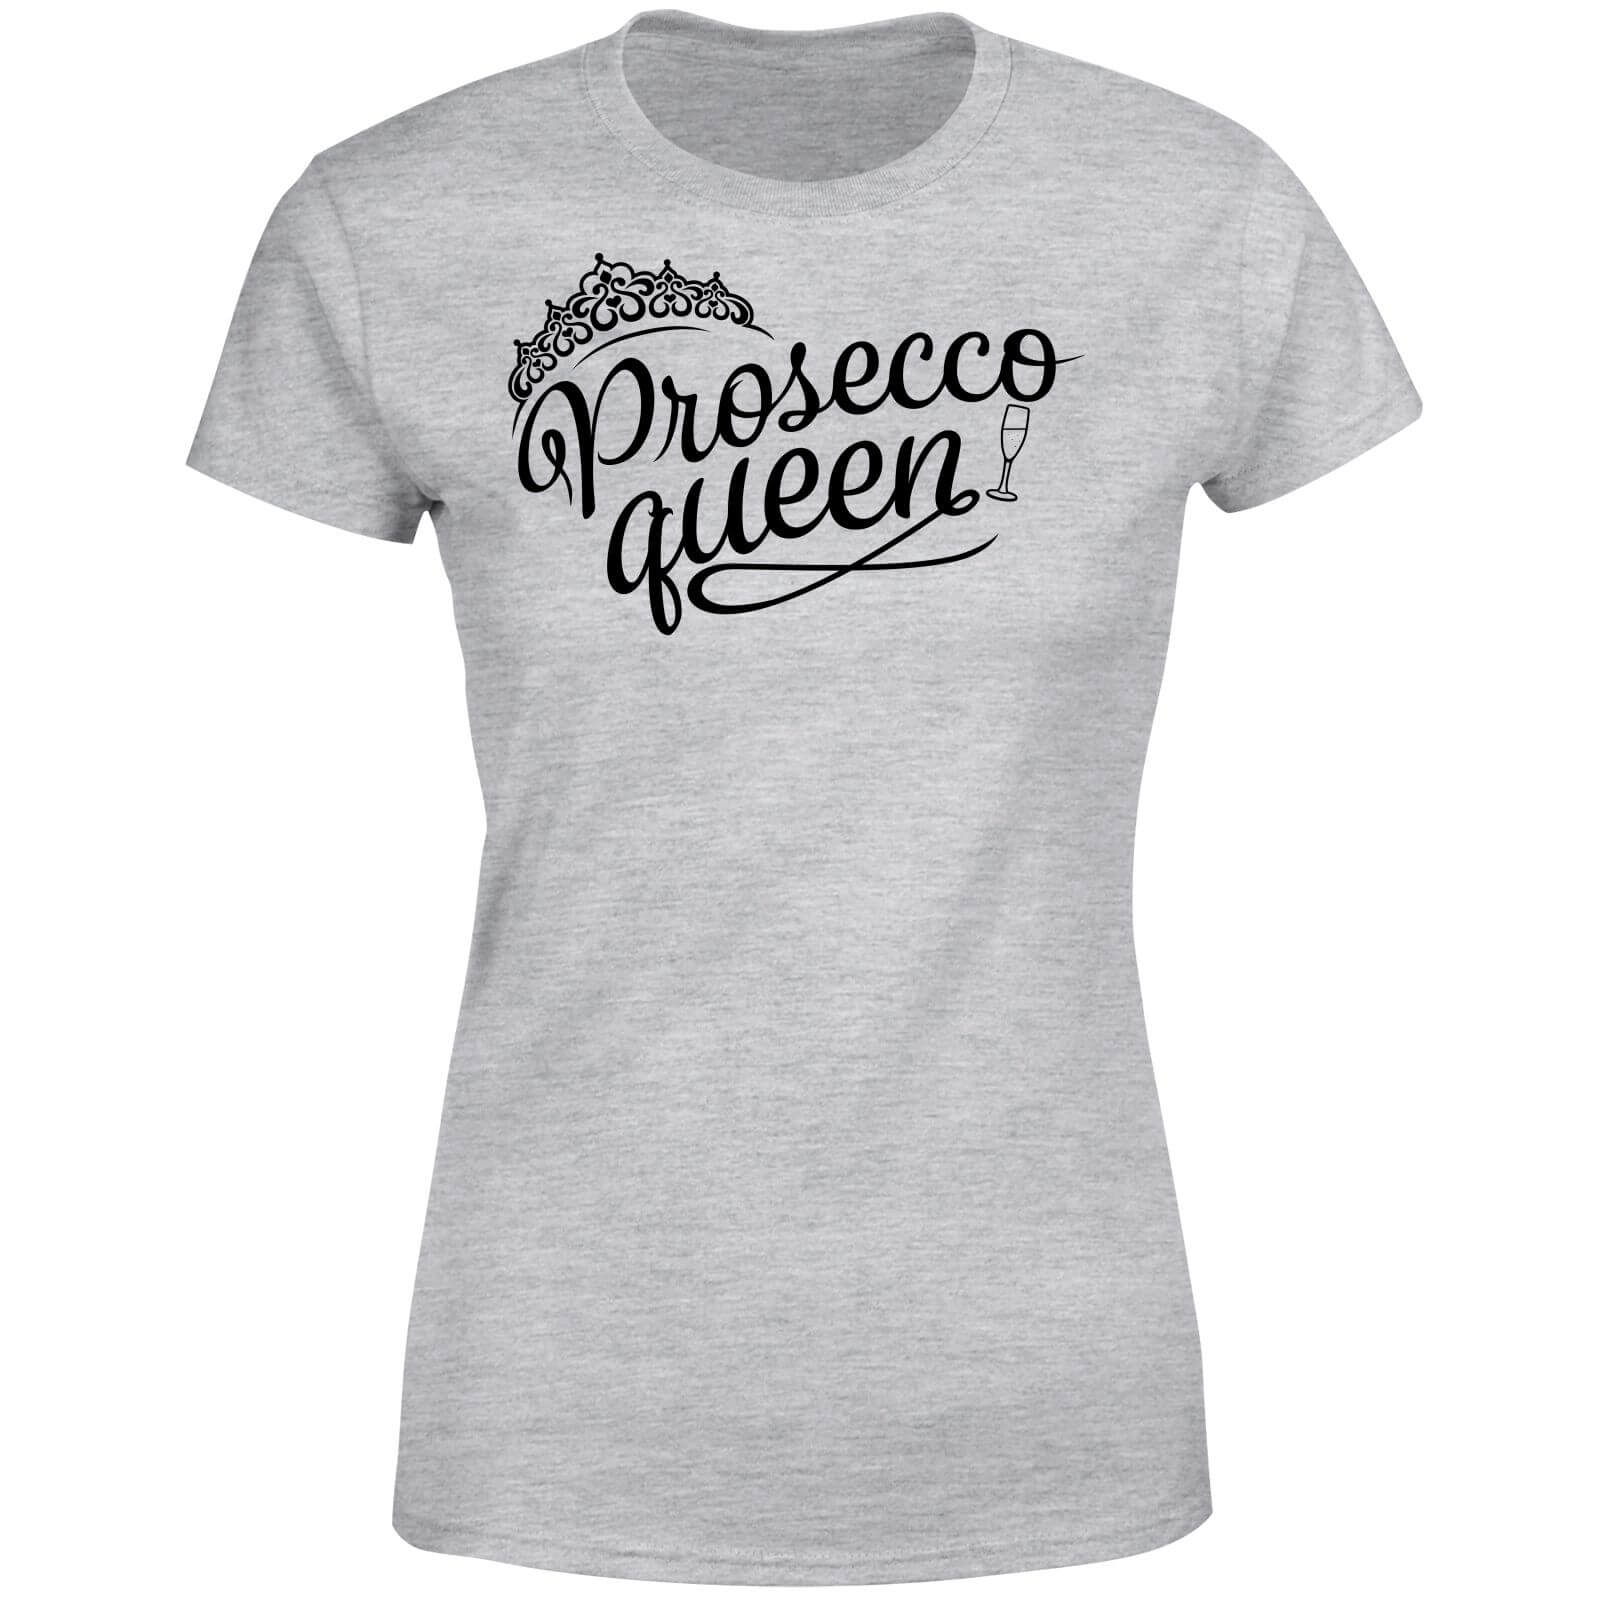 Prosecco Queen Women's T-Shirt - Grey - S - Grey